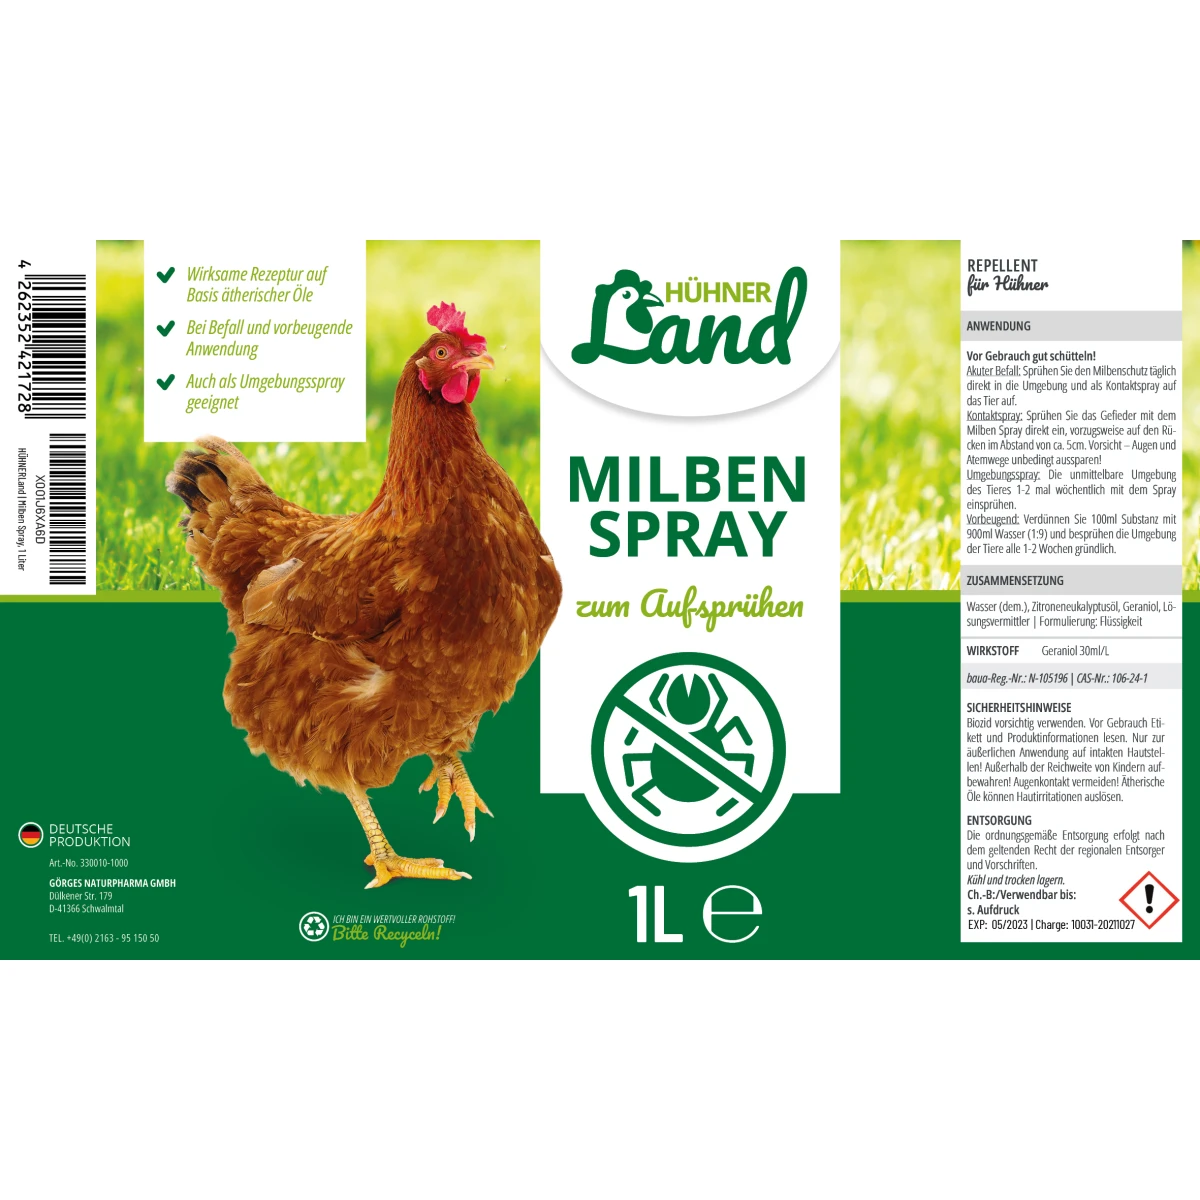 Spray antiacaro per pollame 1 L